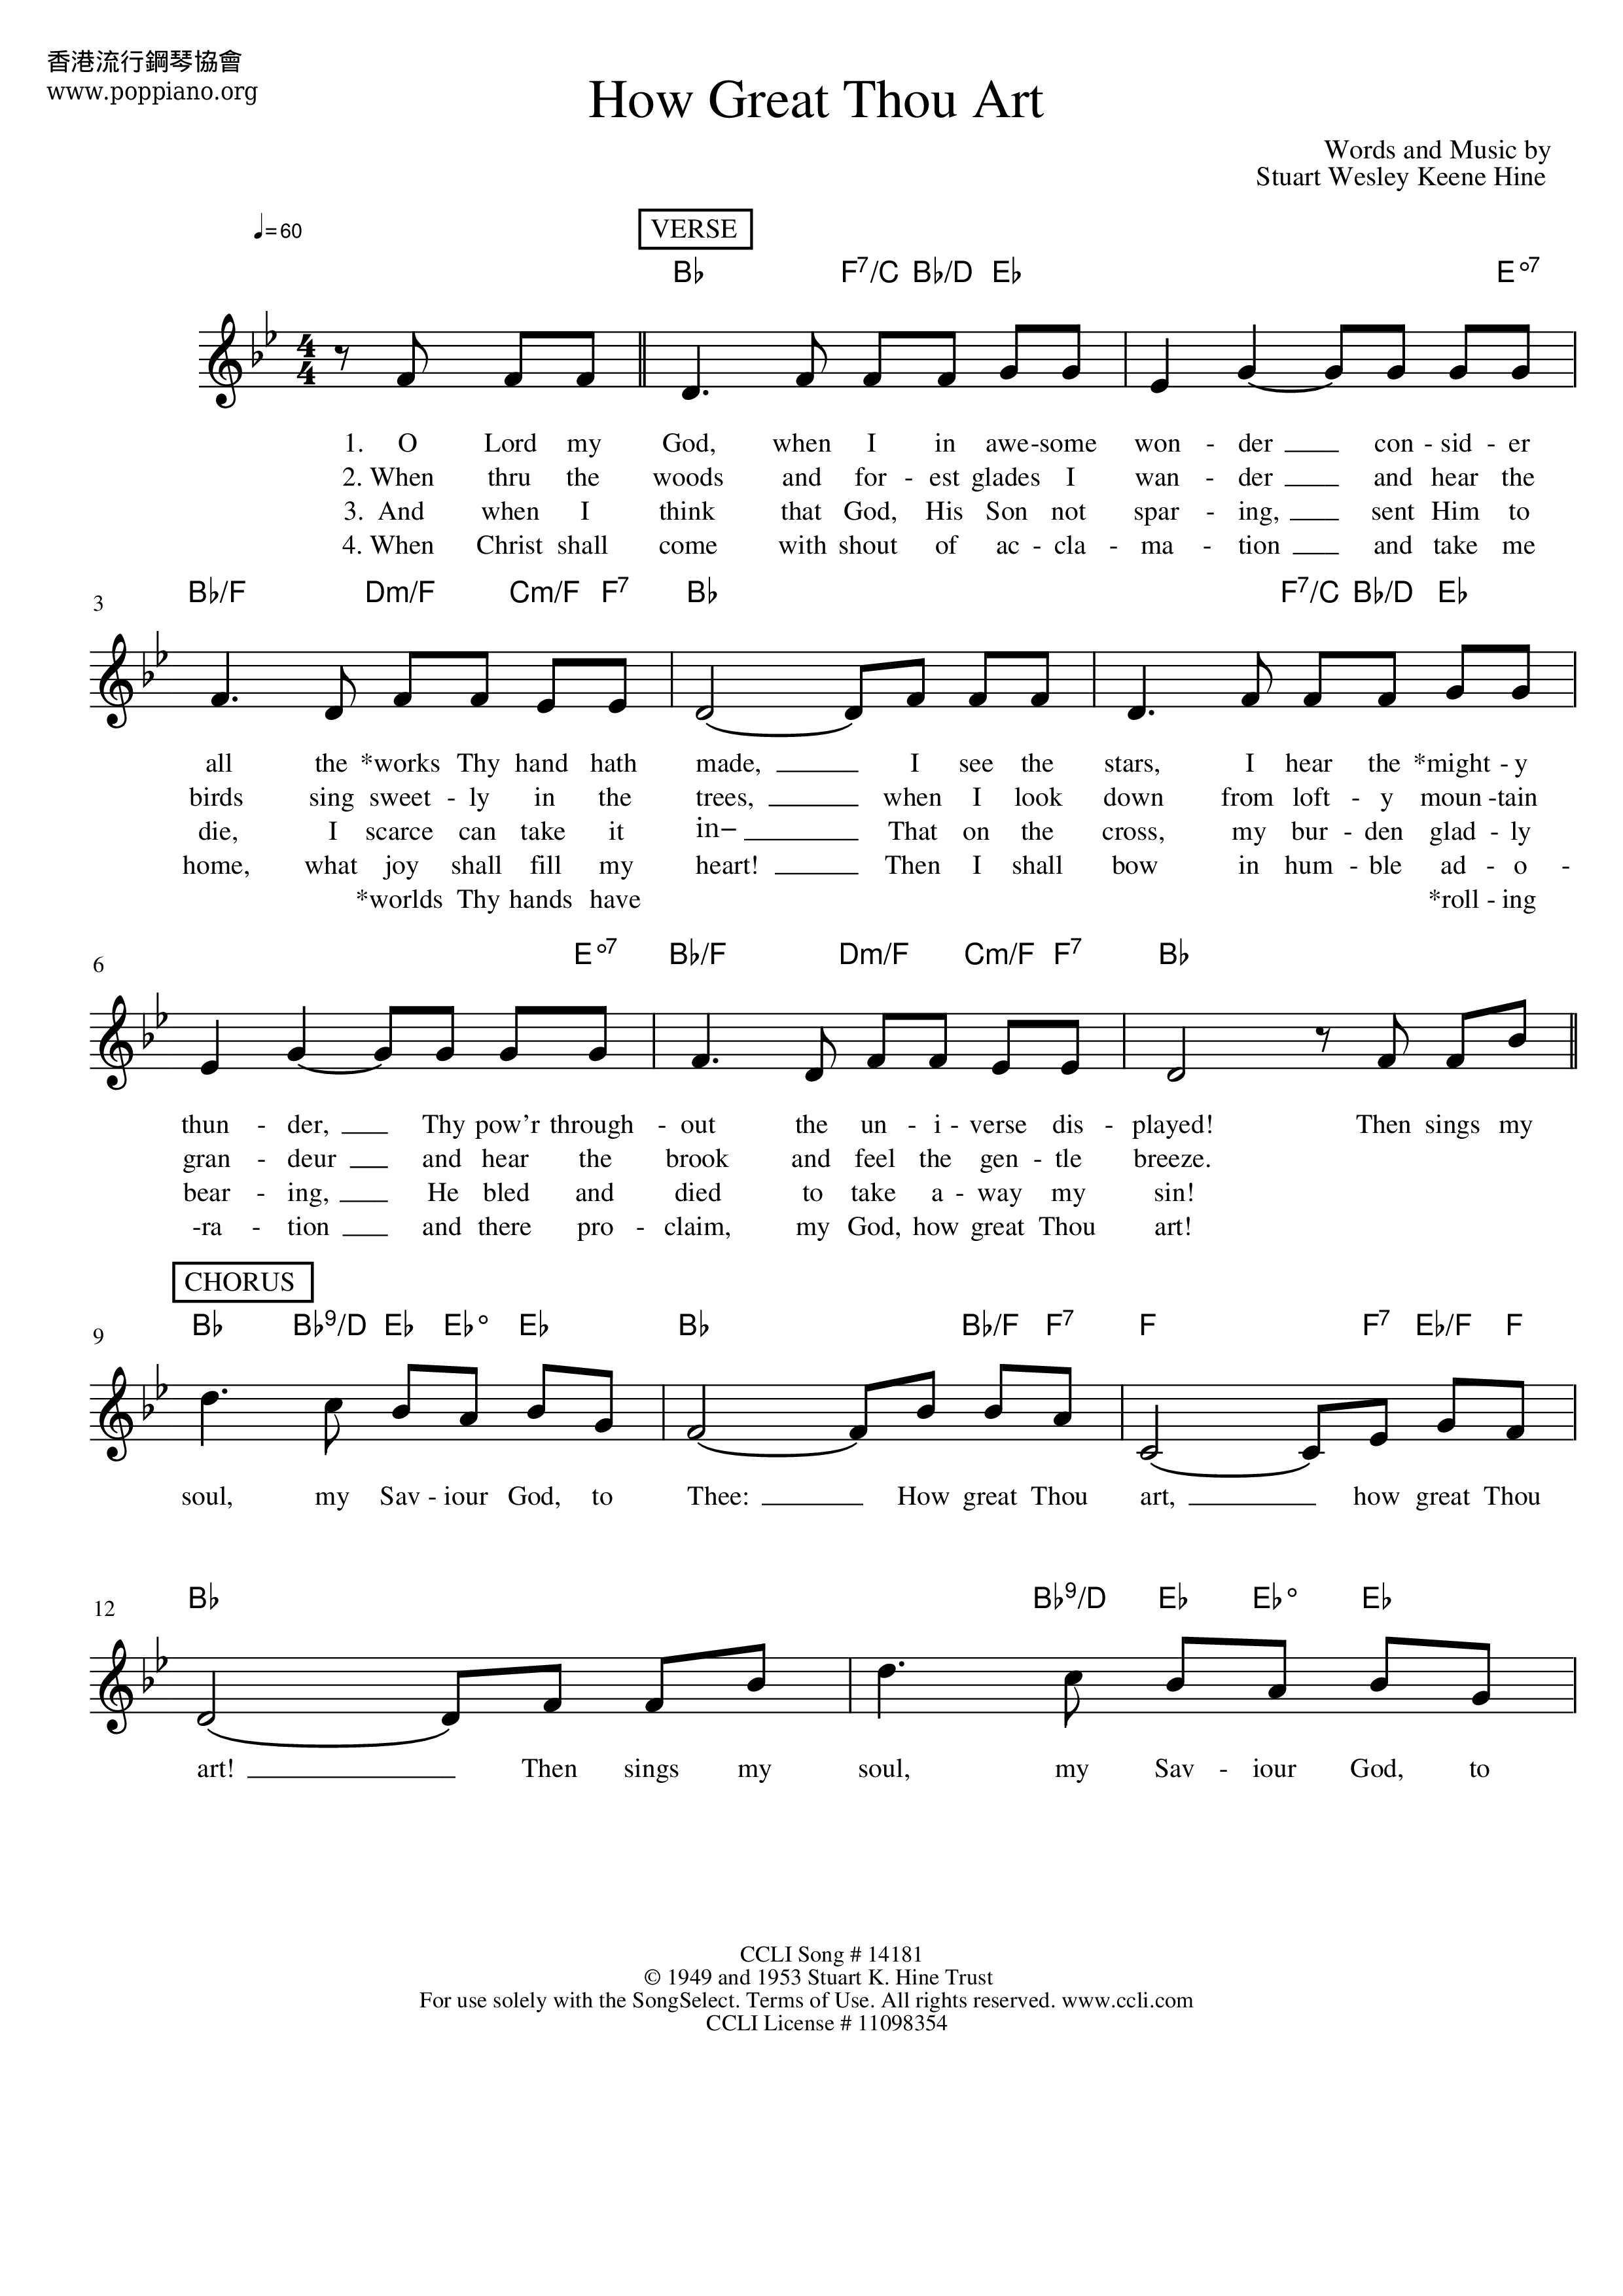 HymnHow Great Thou Art Sheet Music pdf, Free Score Download ★